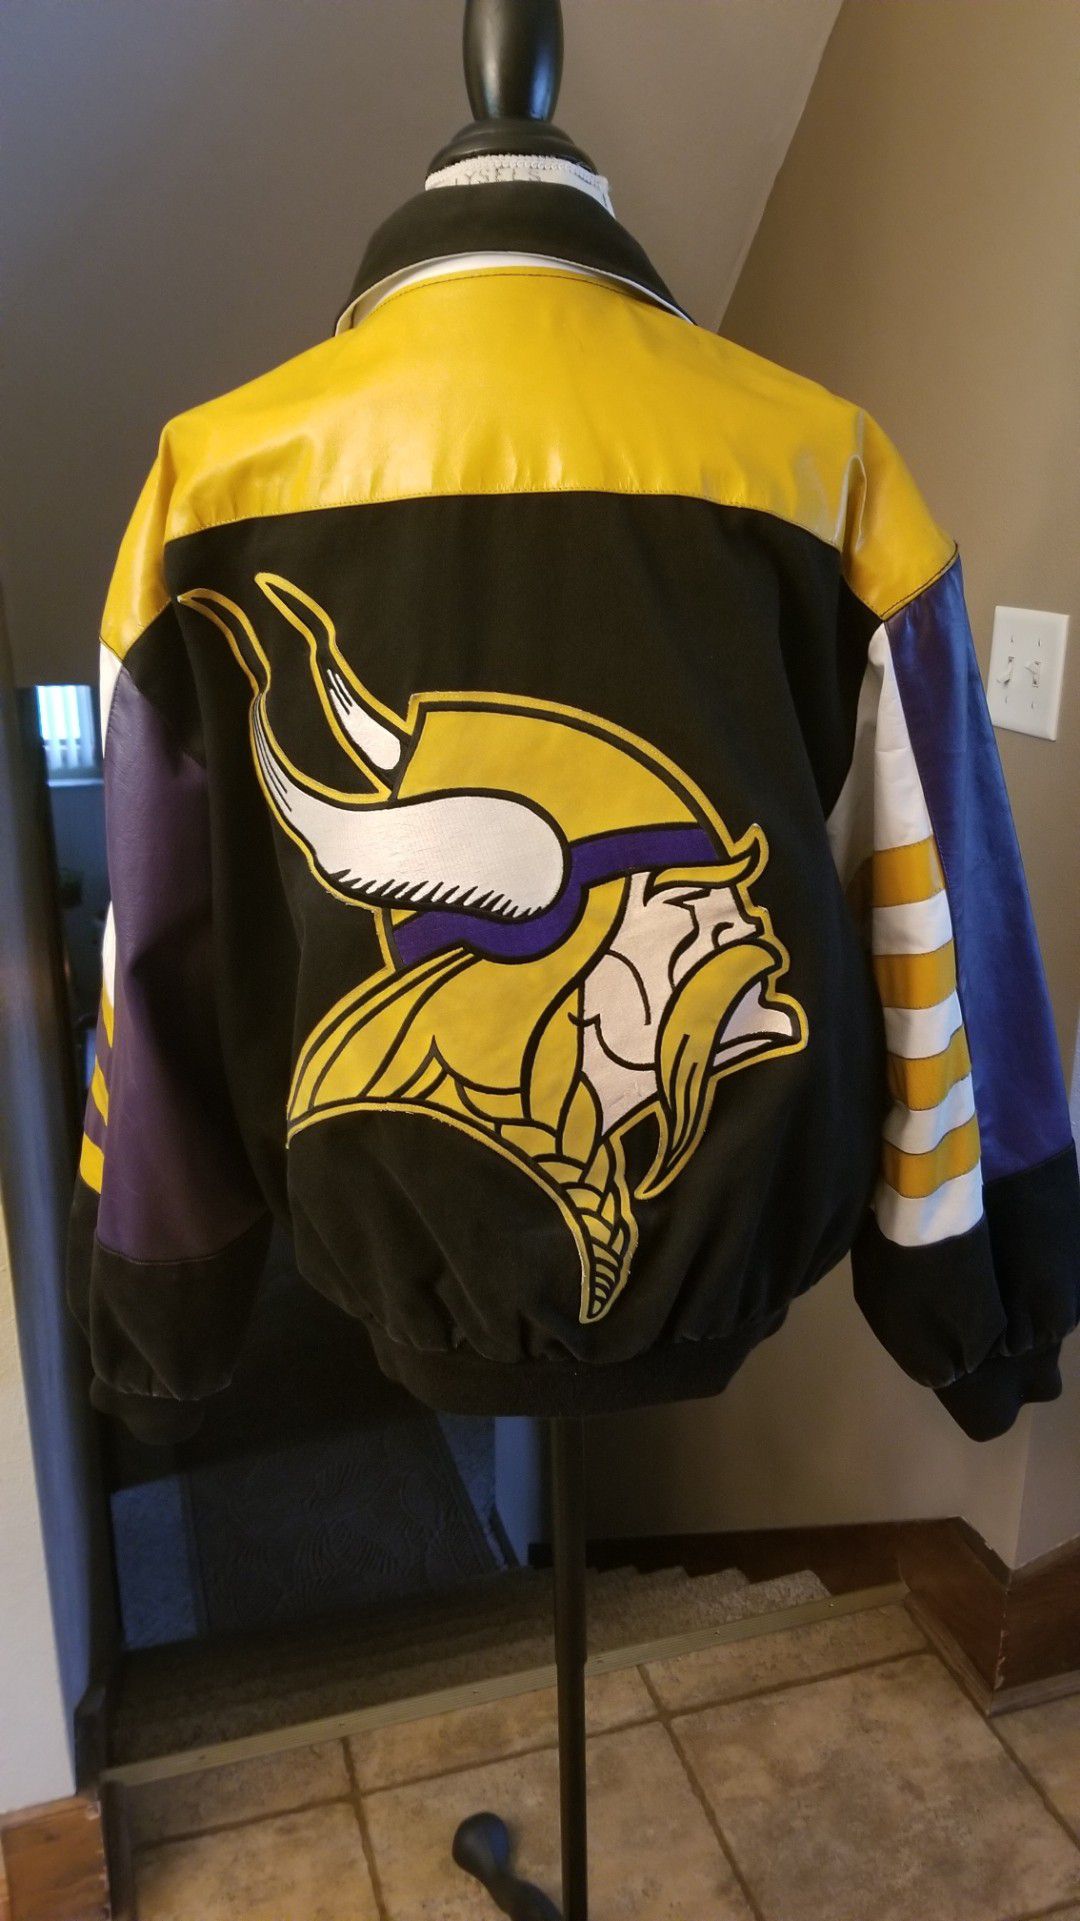 Minnesota Vikings jacket in very nice condition